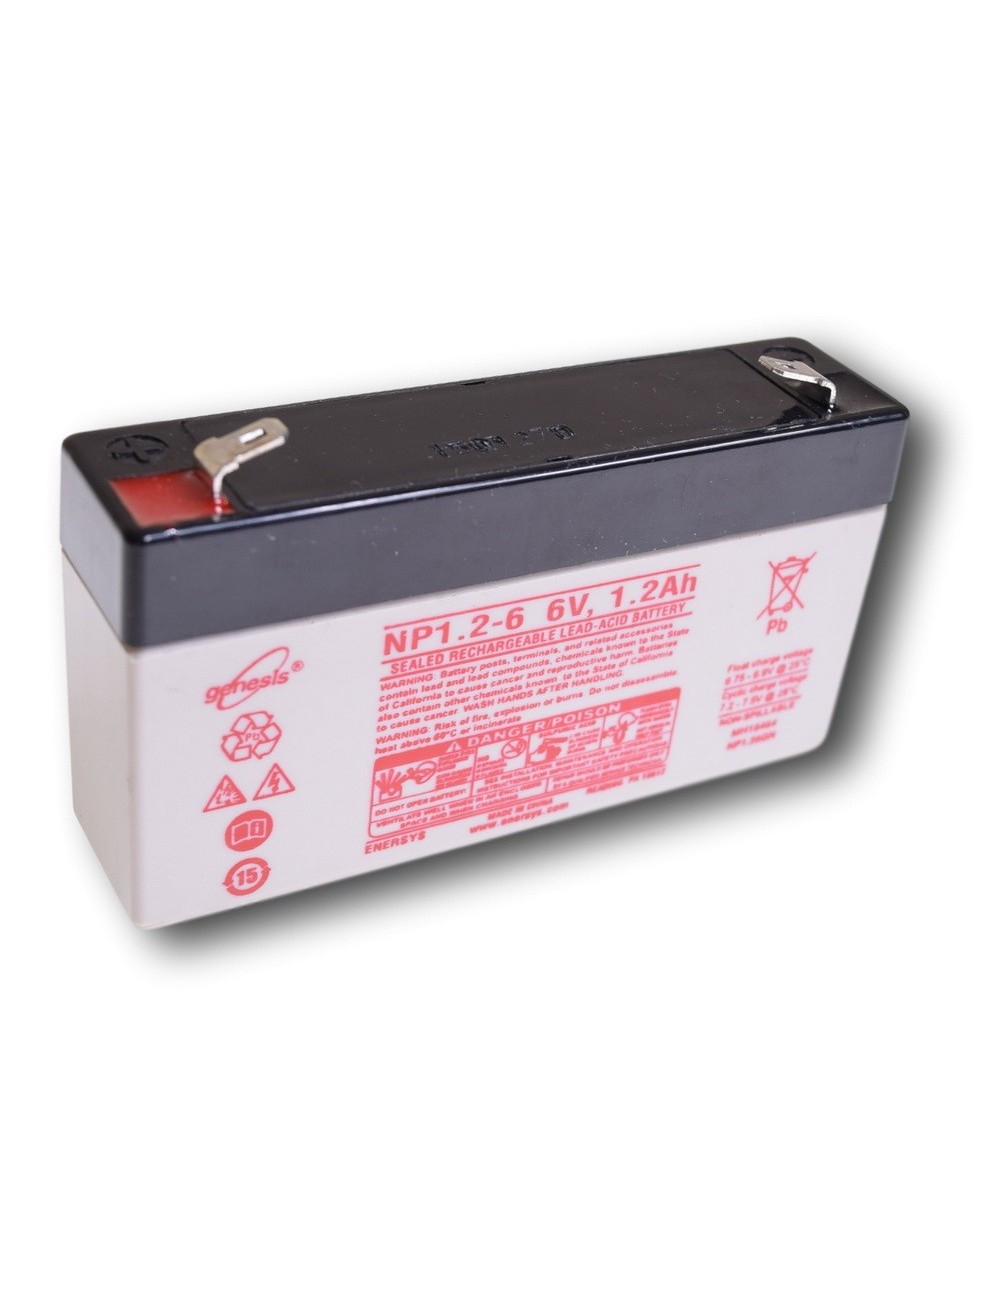 Loodbatterij 6V 1,2Ah (NP1.2-6)